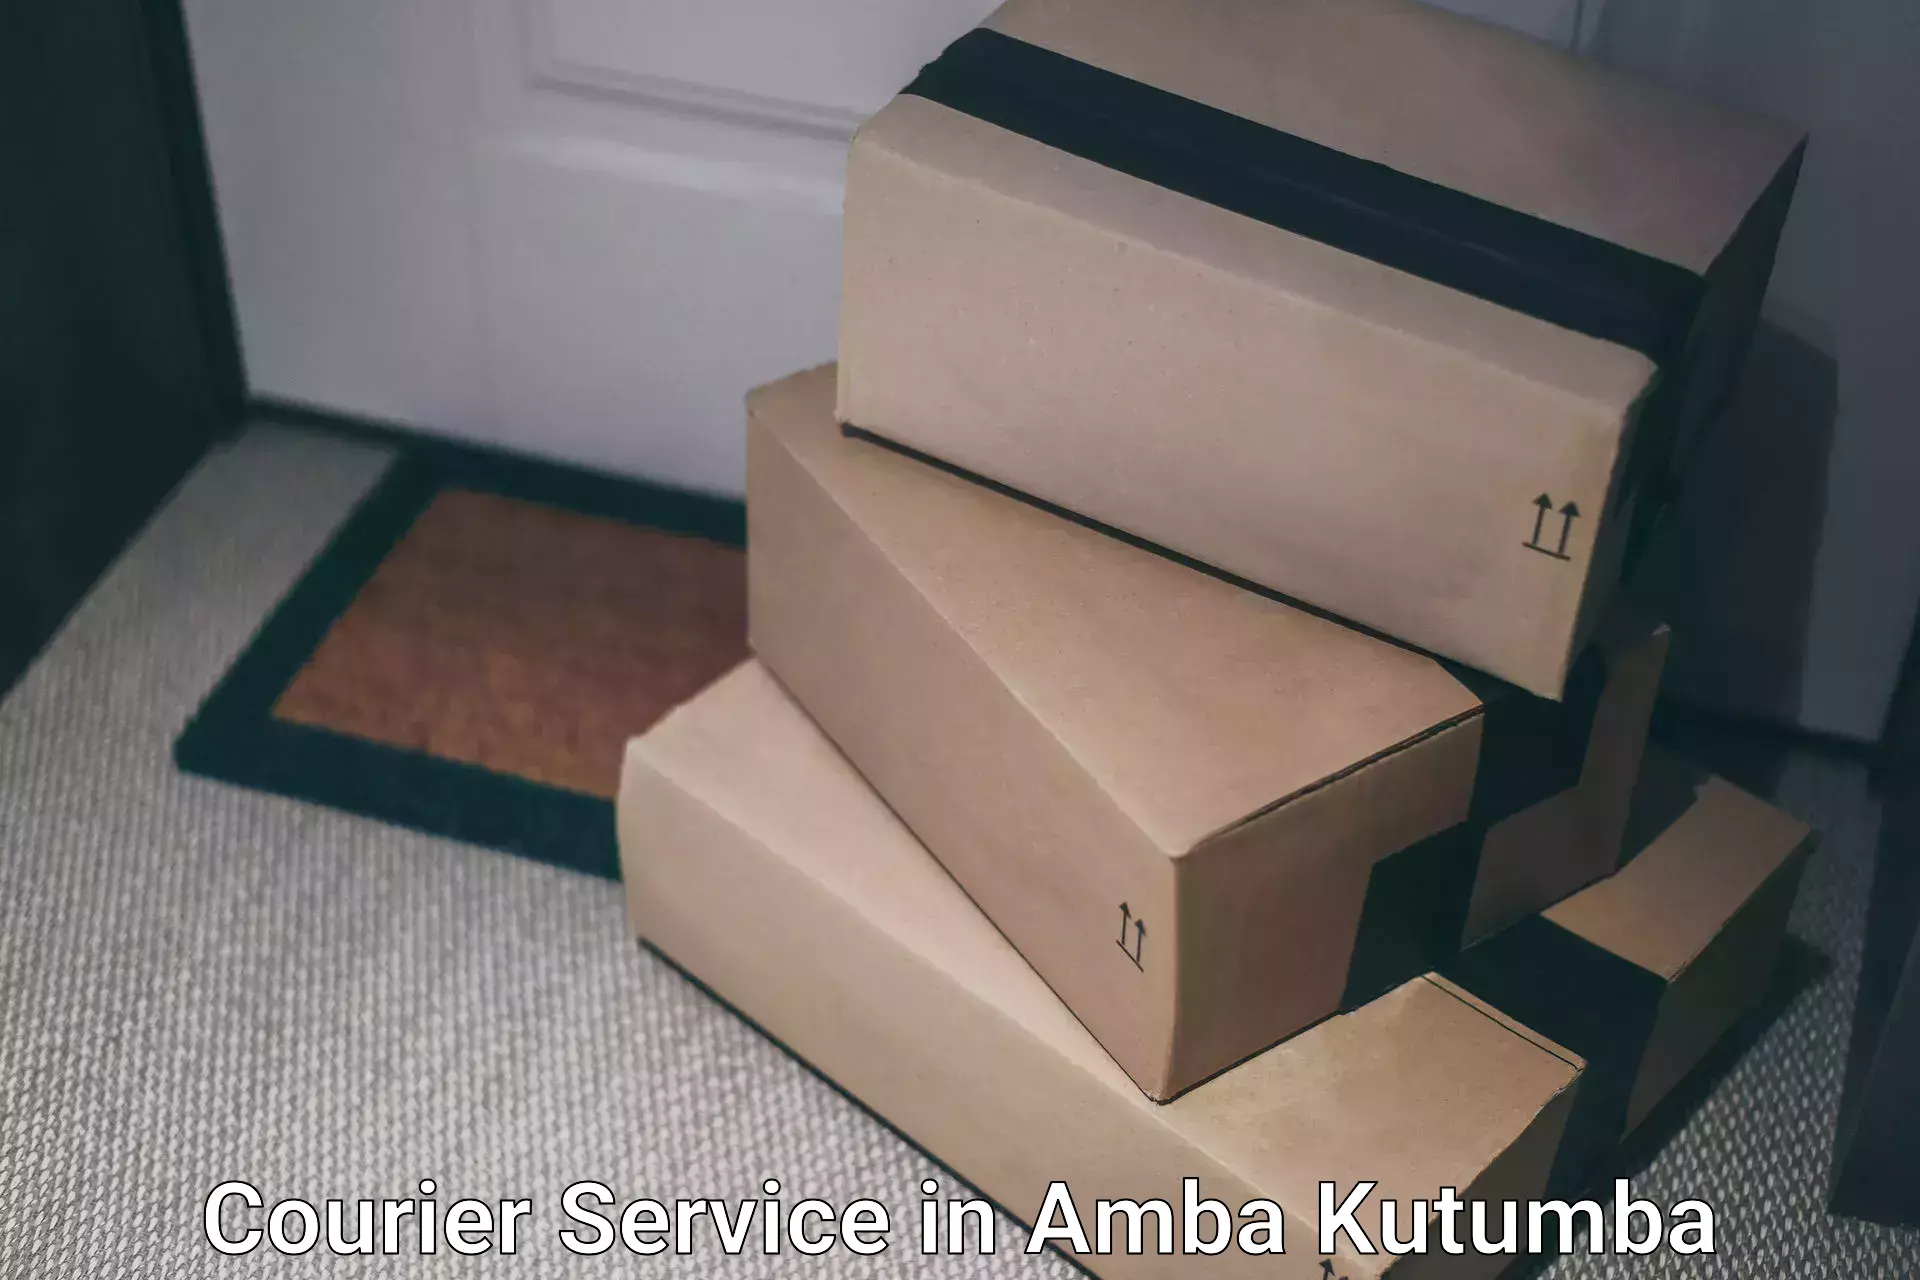 Specialized shipment handling in Amba Kutumba